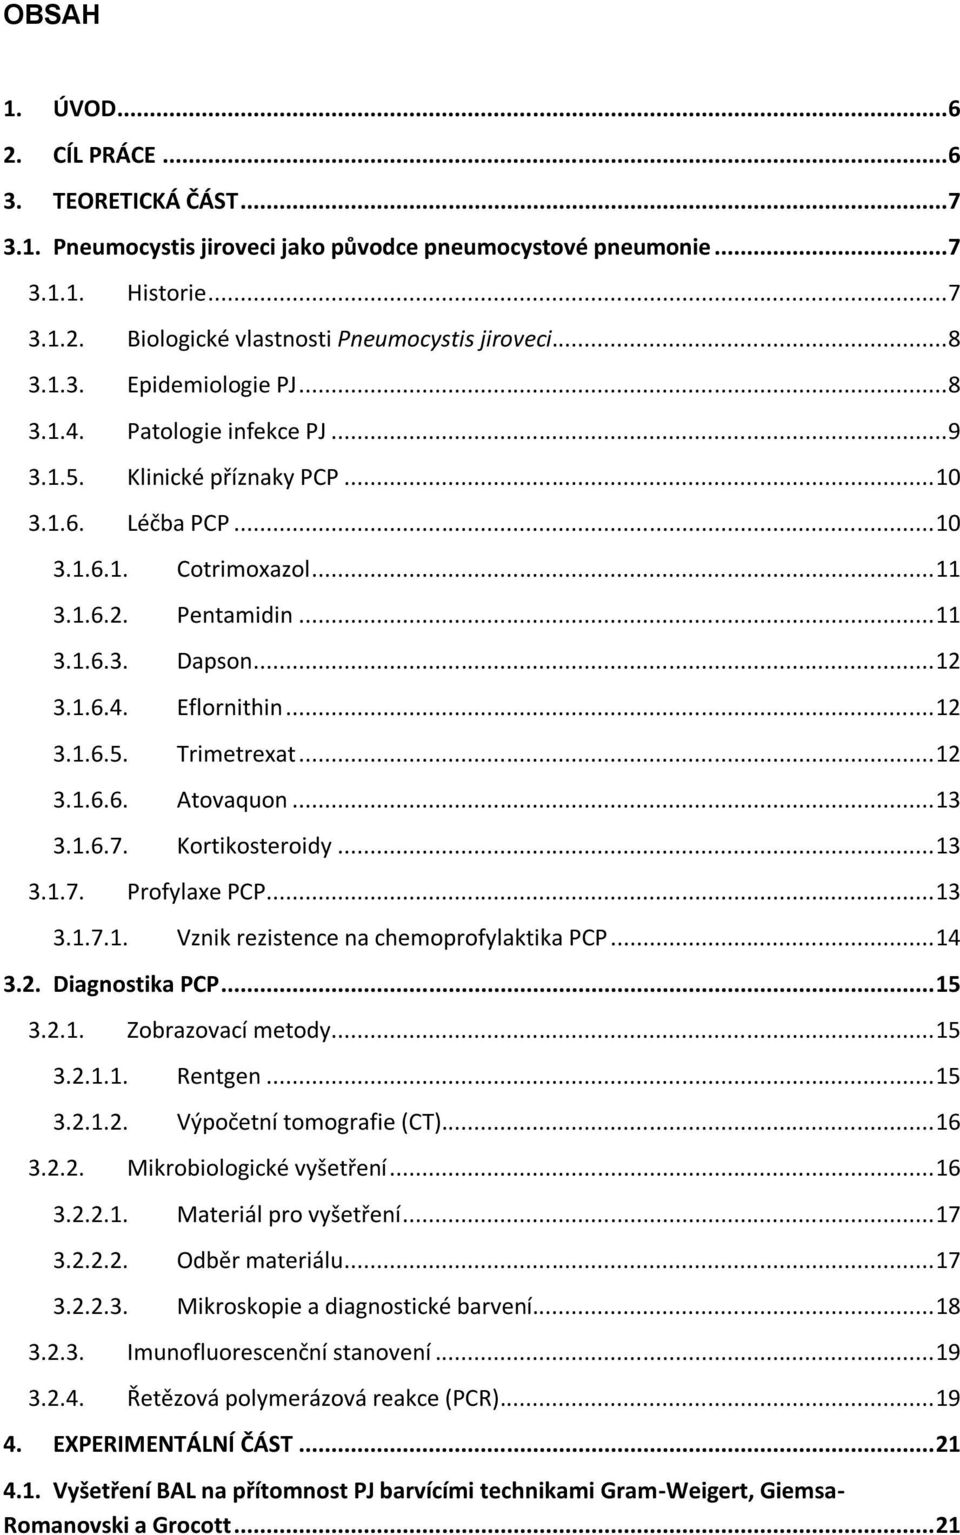 .. 12 3.1.6.4. Eflornithin... 12 3.1.6.5. Trimetrexat... 12 3.1.6.6. Atovaquon... 13 3.1.6.7. Kortikosteroidy... 13 3.1.7. Profylaxe PCP... 13 3.1.7.1. Vznik rezistence na chemoprofylaktika PCP... 14 3.